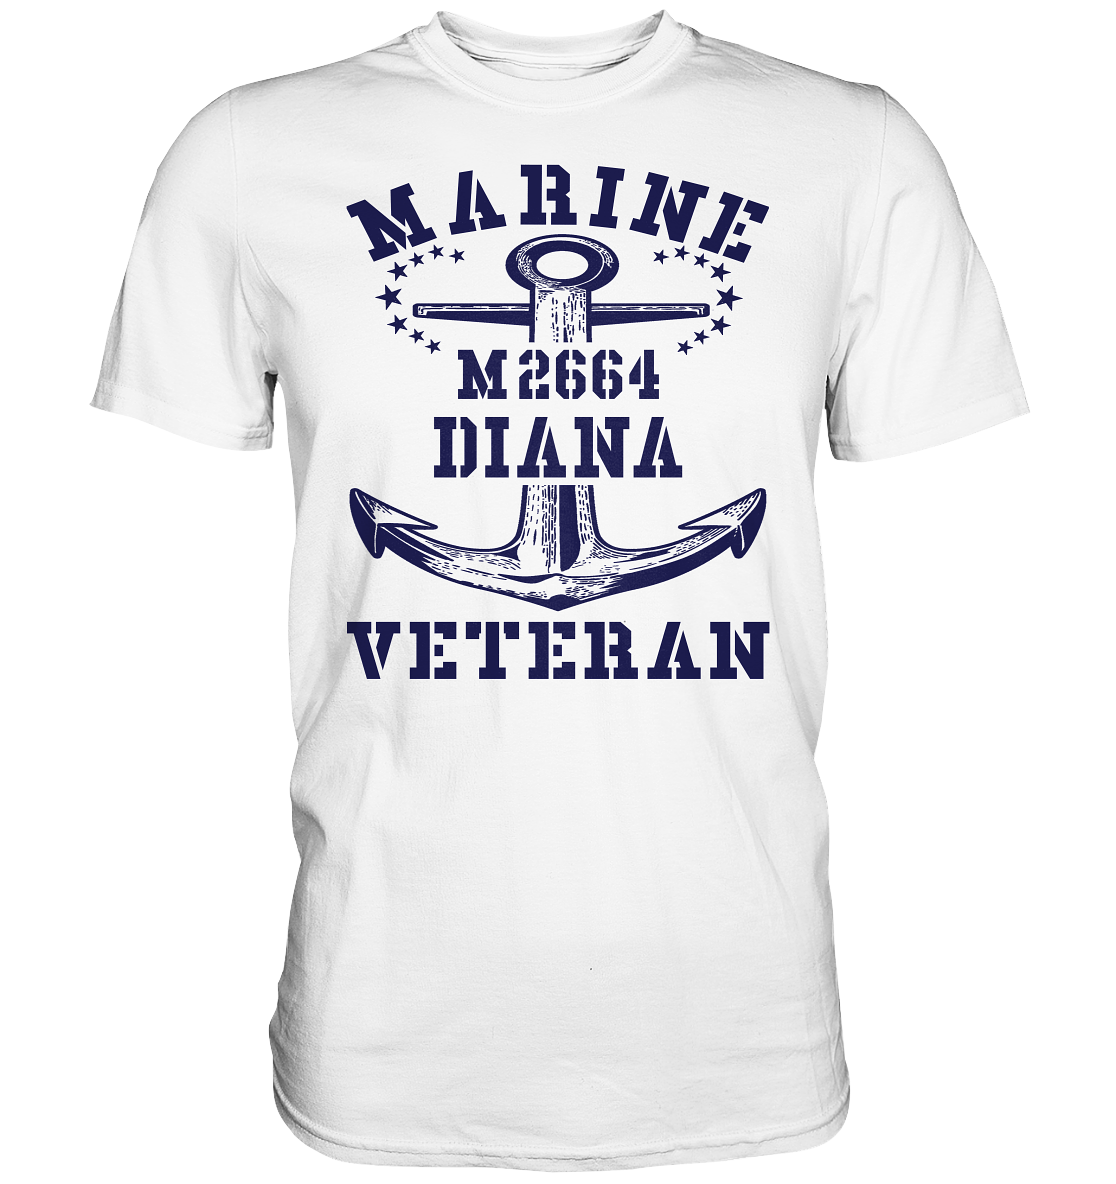 BiMi M2664 DIANA Marine Veteran - Premium Shirt